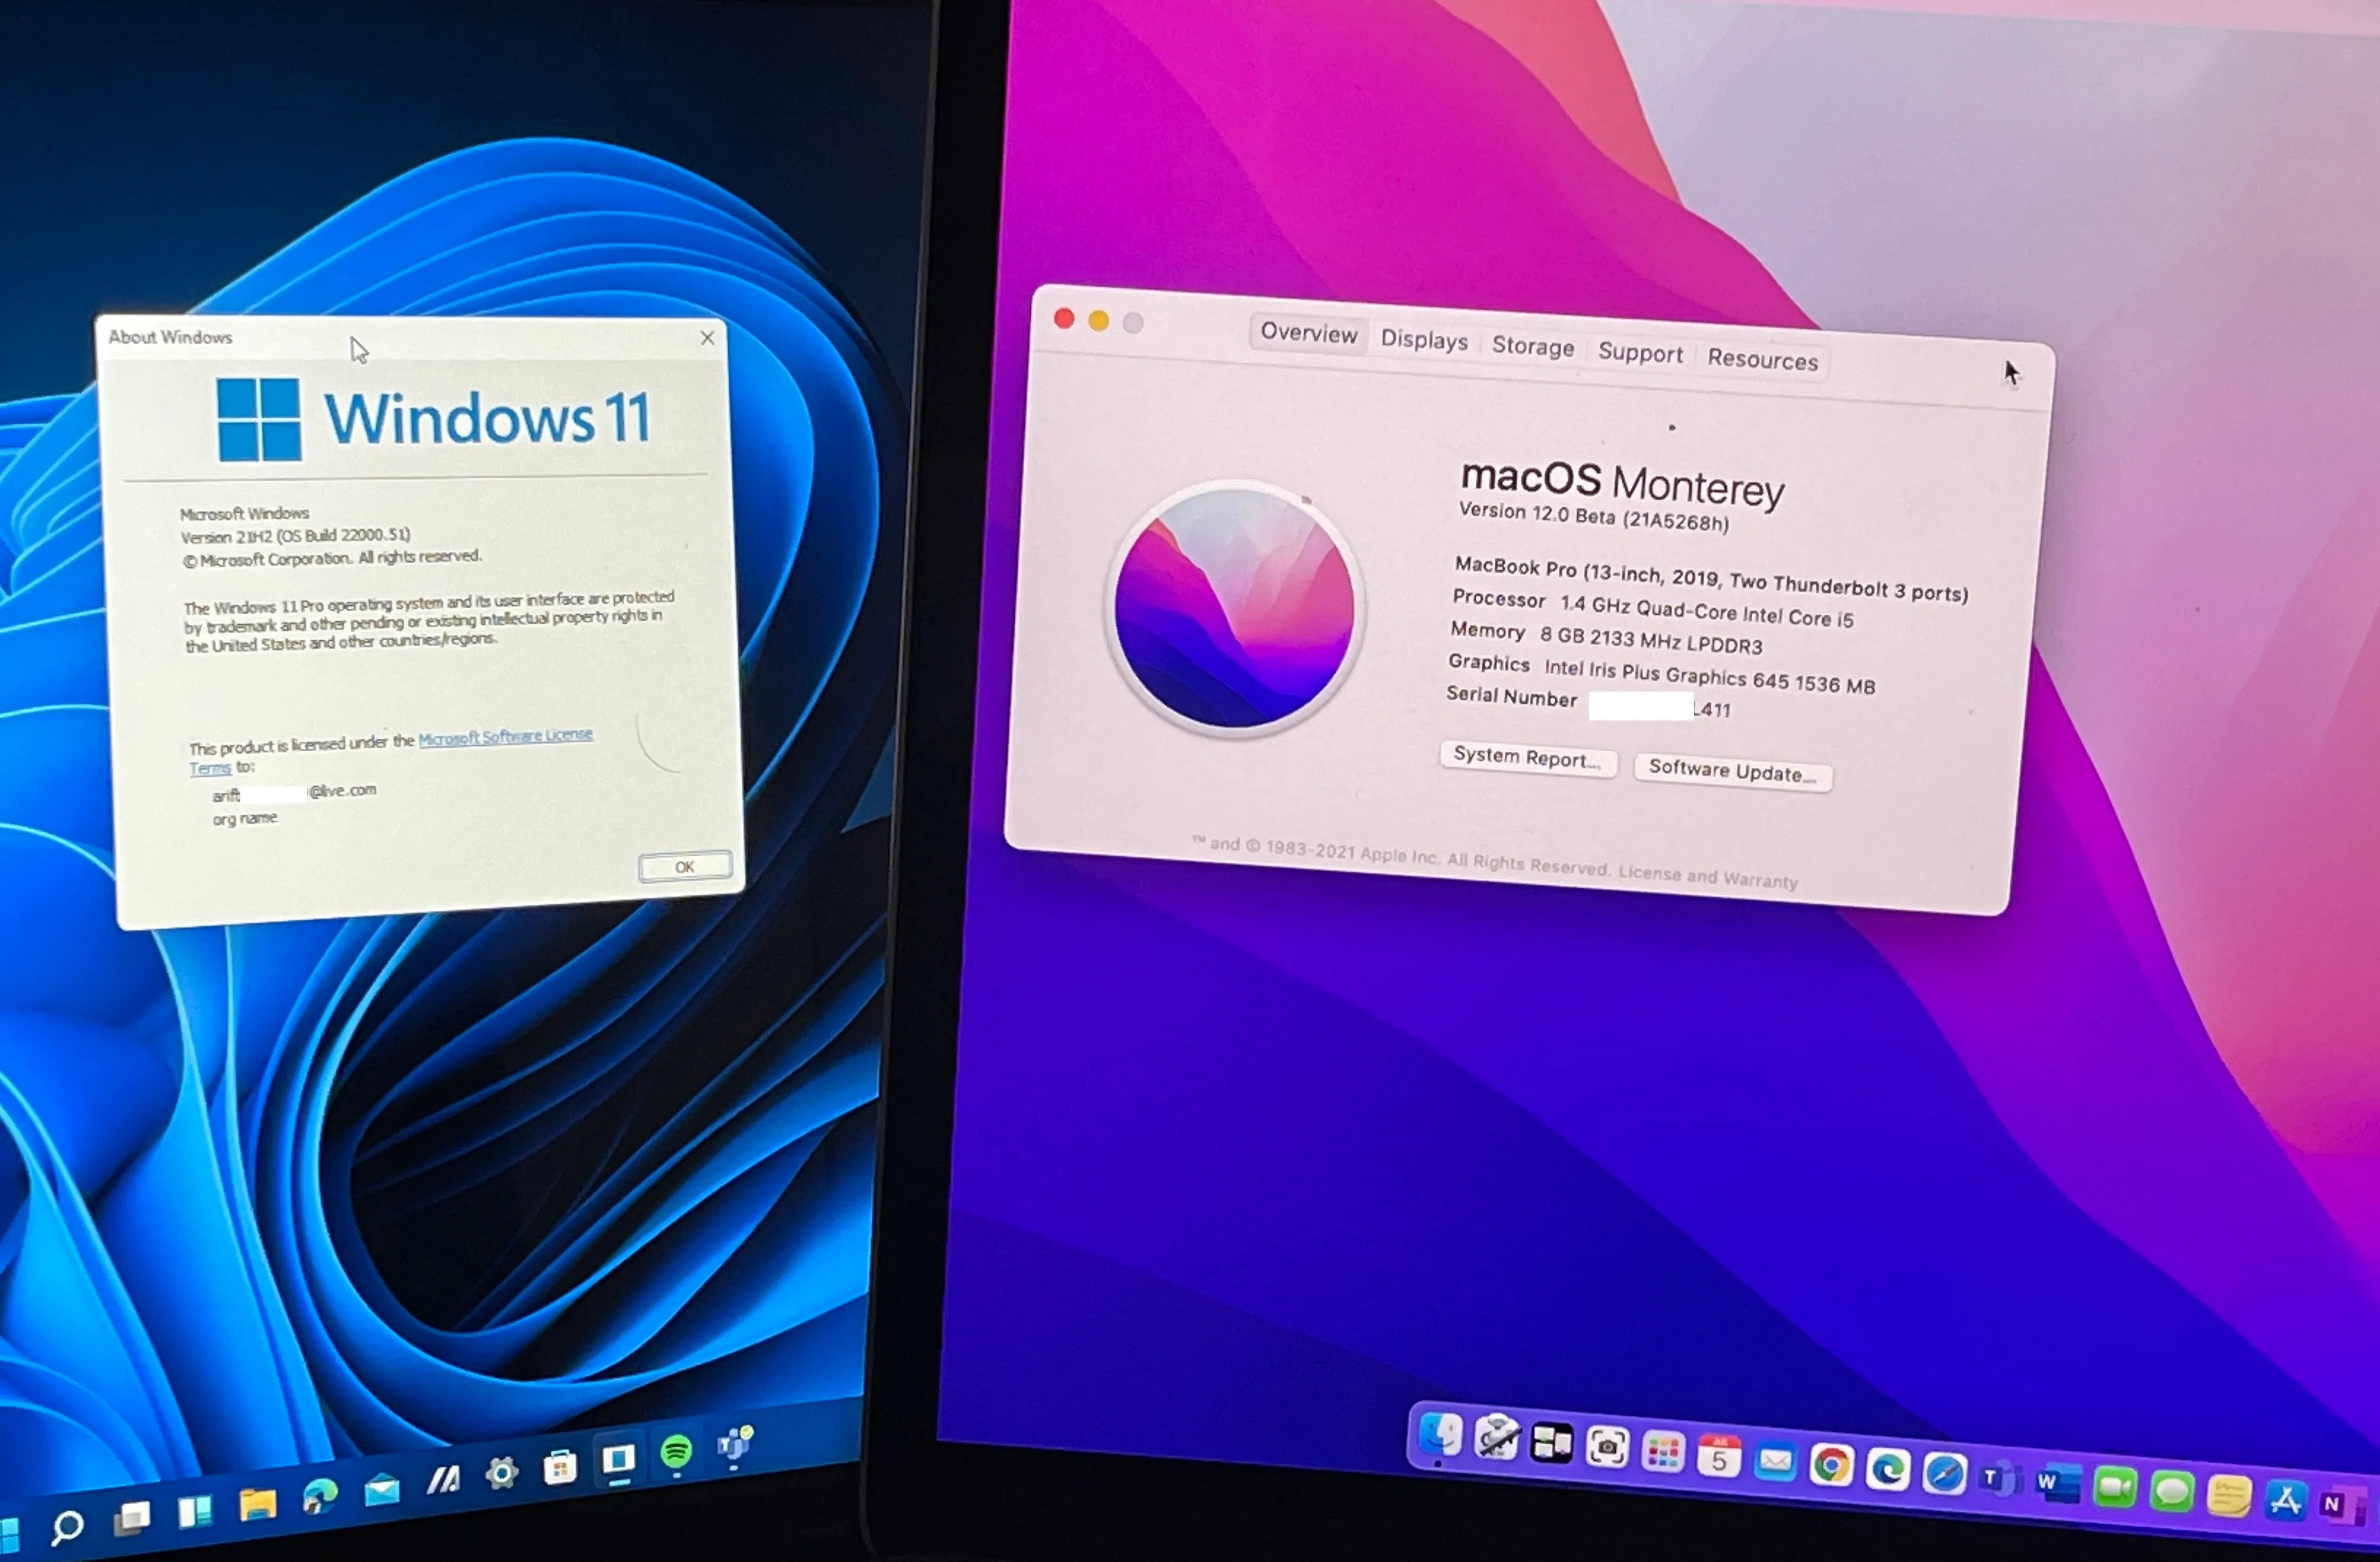 Le pagine su macOS Monterey e Windows 11 affiancate